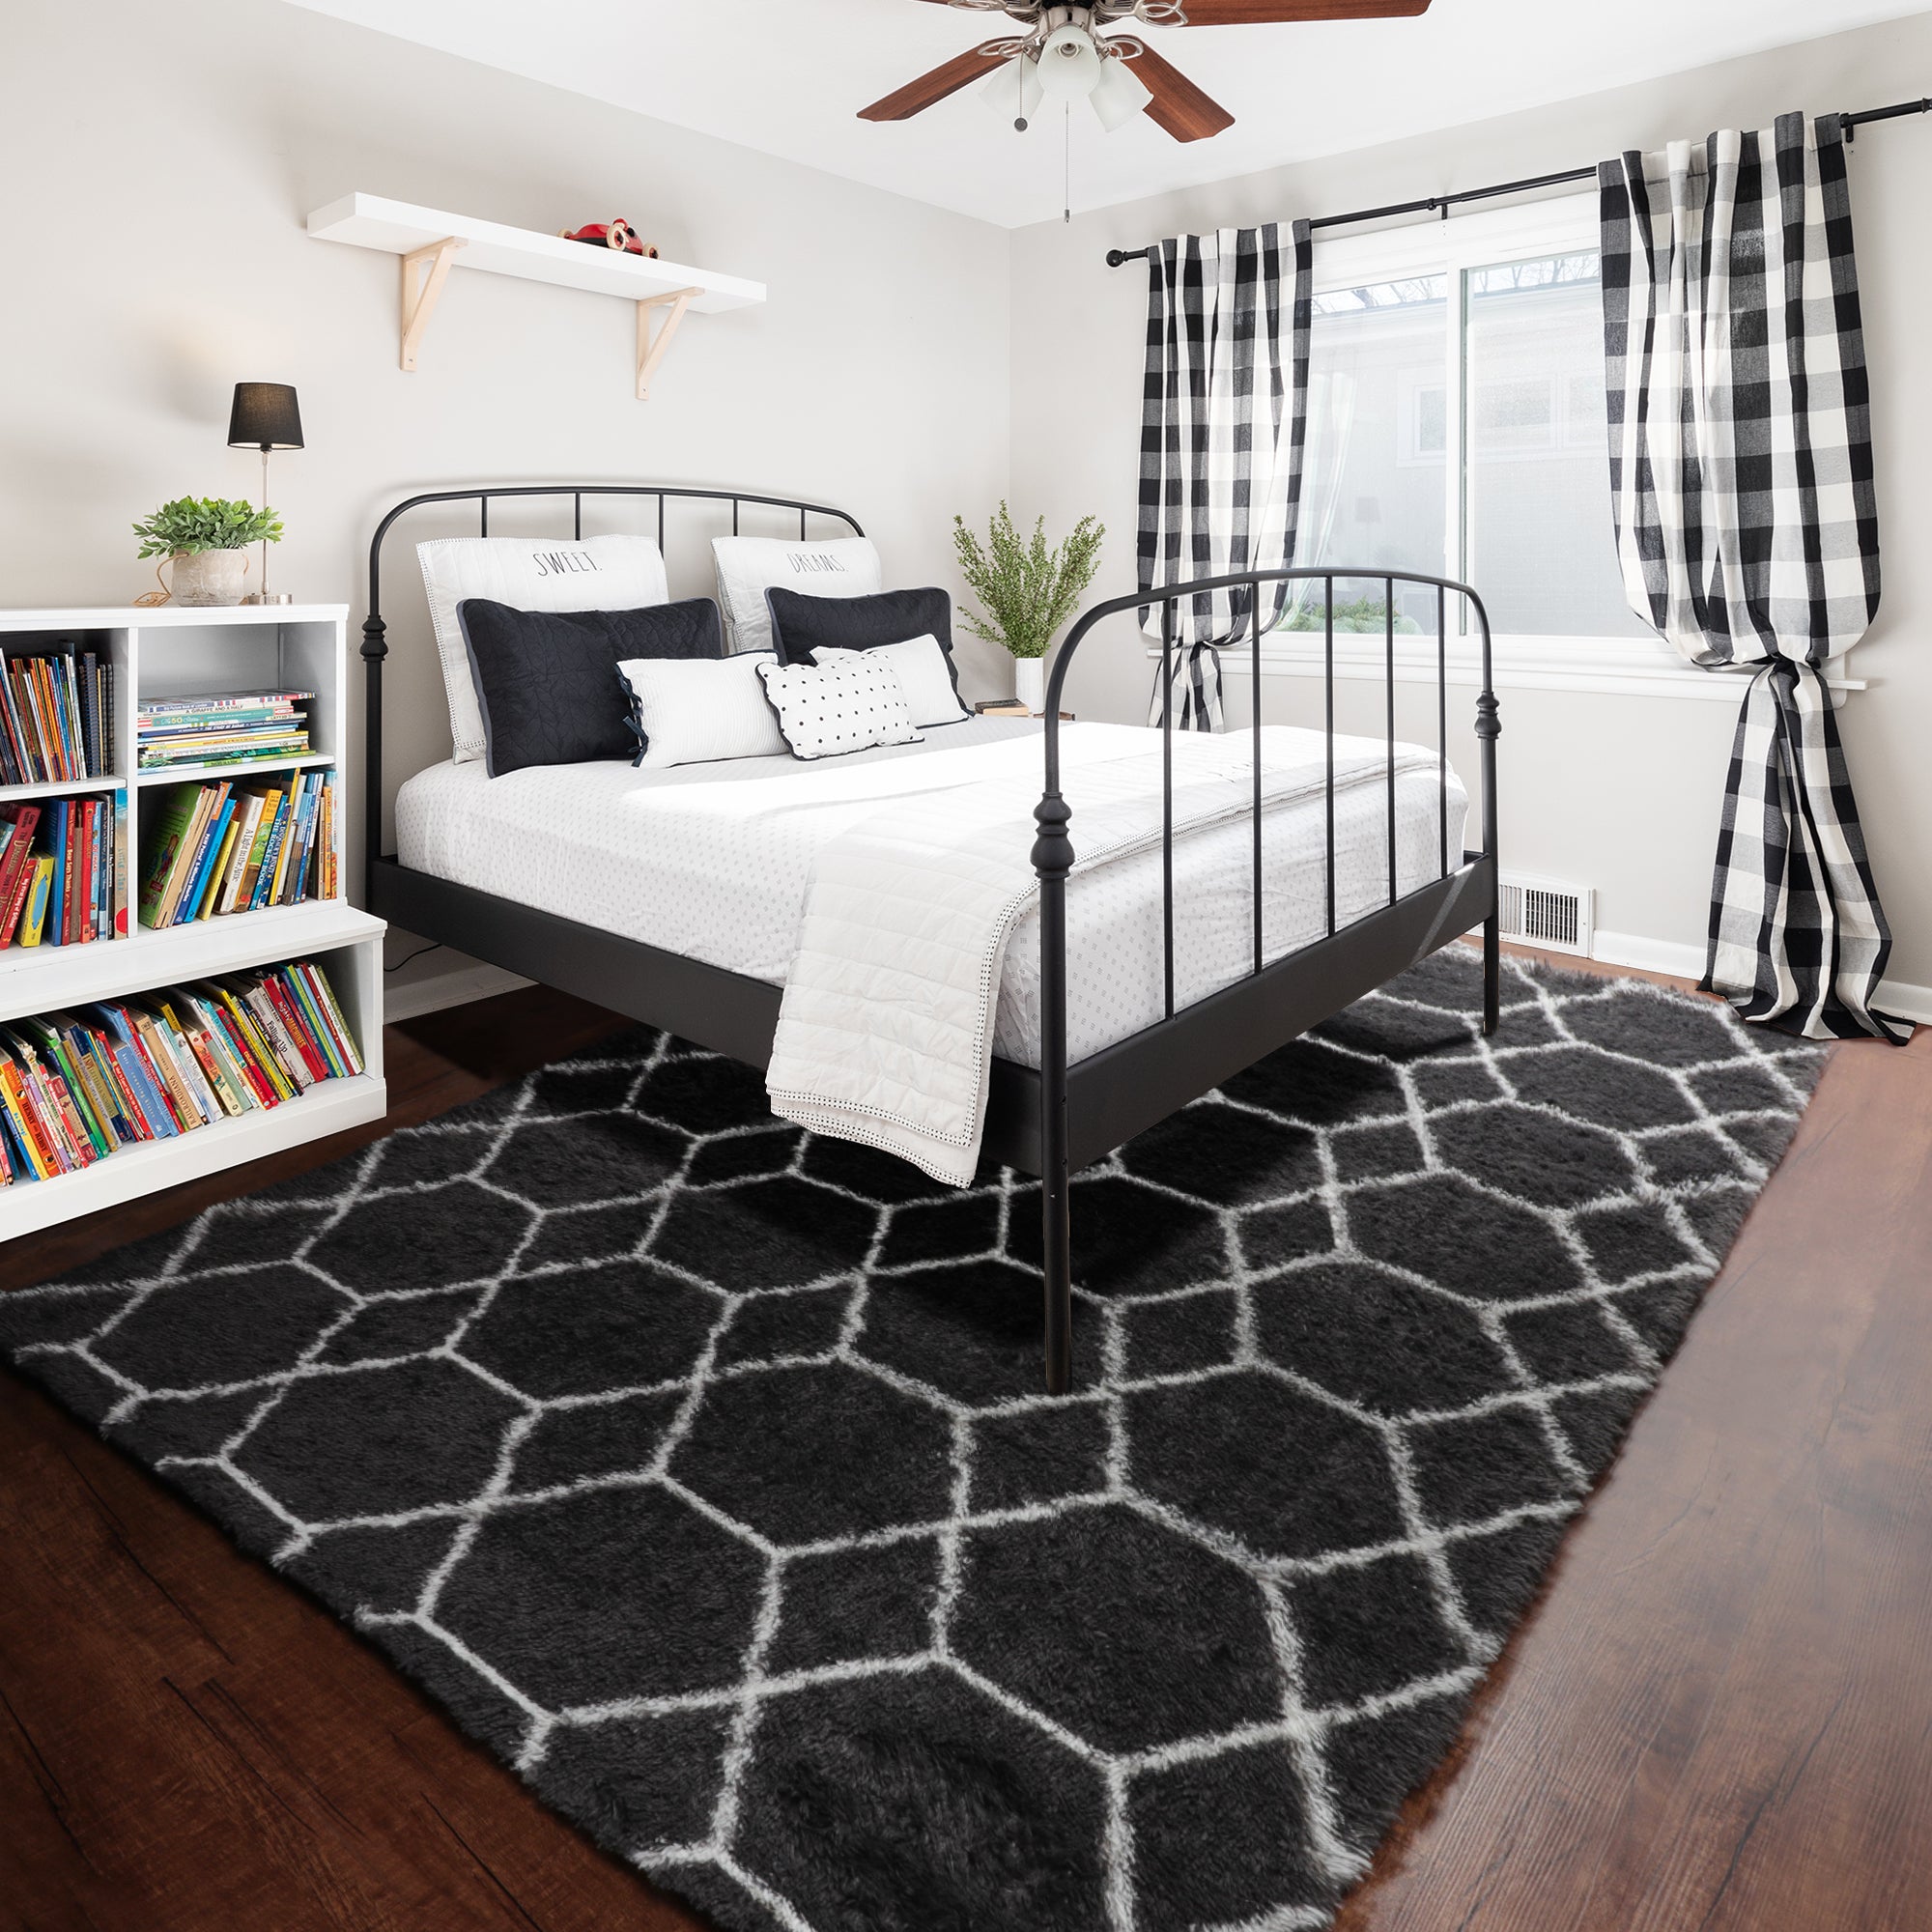 Large Modern Shag Rug for Living Room, Geometric Floor Rug, Dark Grey and White Rug